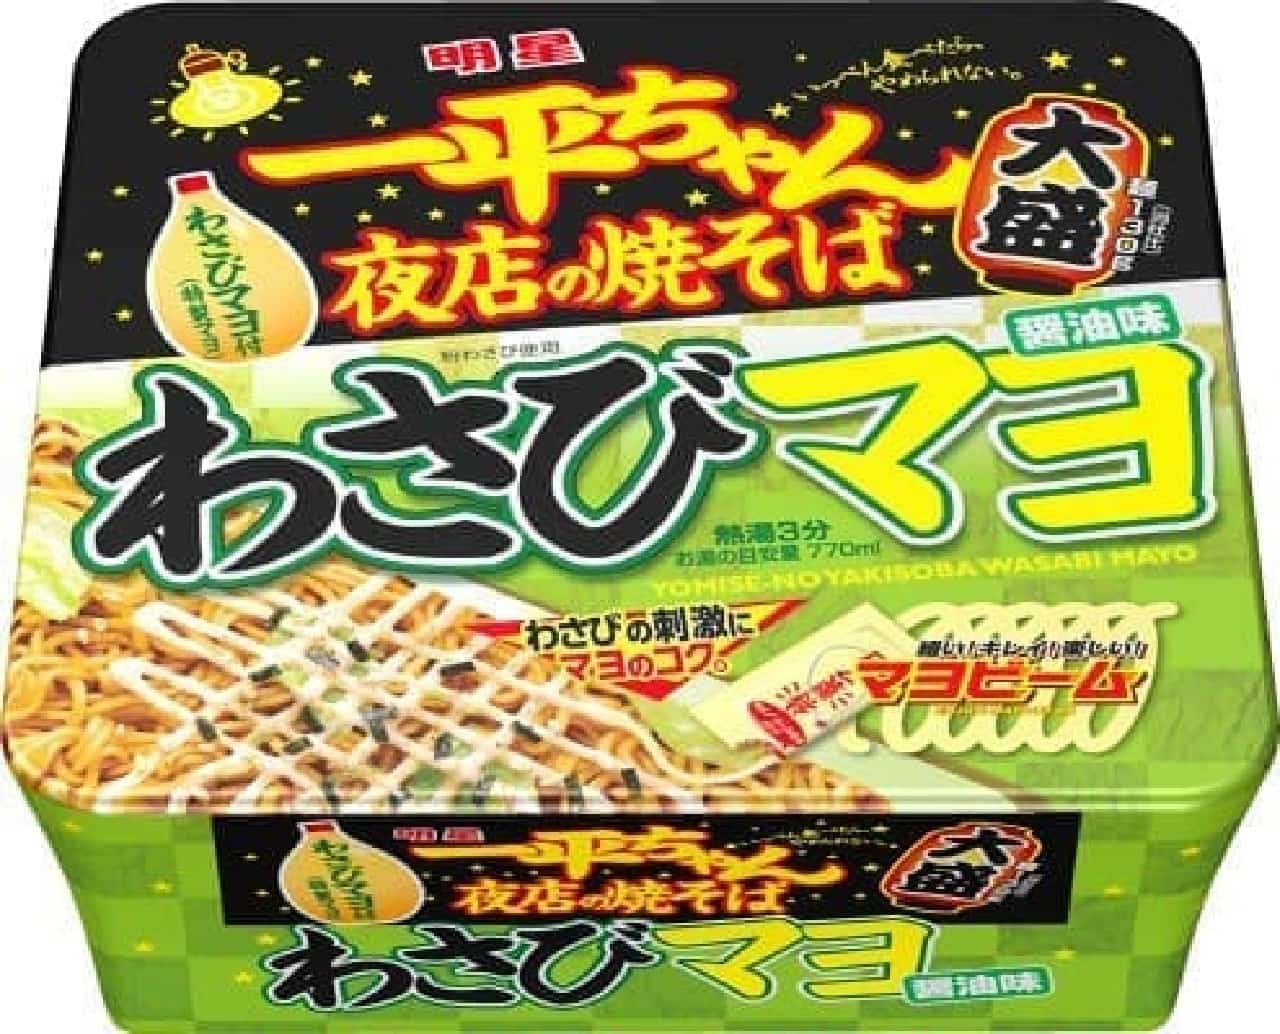 "Ippei-chan Night Shop Yakisoba Omori Wasabi Mayo Soy Sauce Flavor"